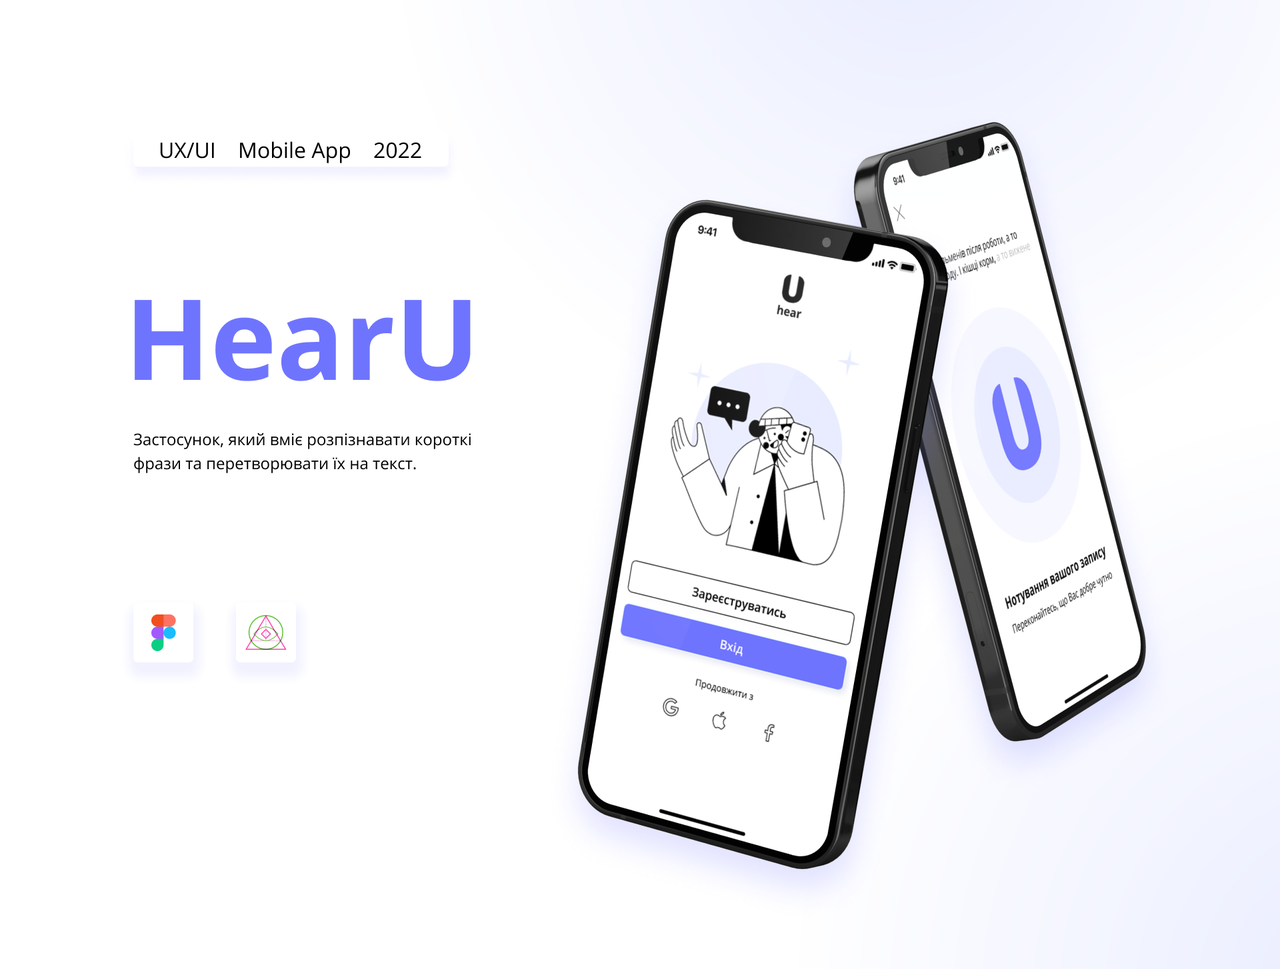 UX/UI Design for Mobile App "HearU"